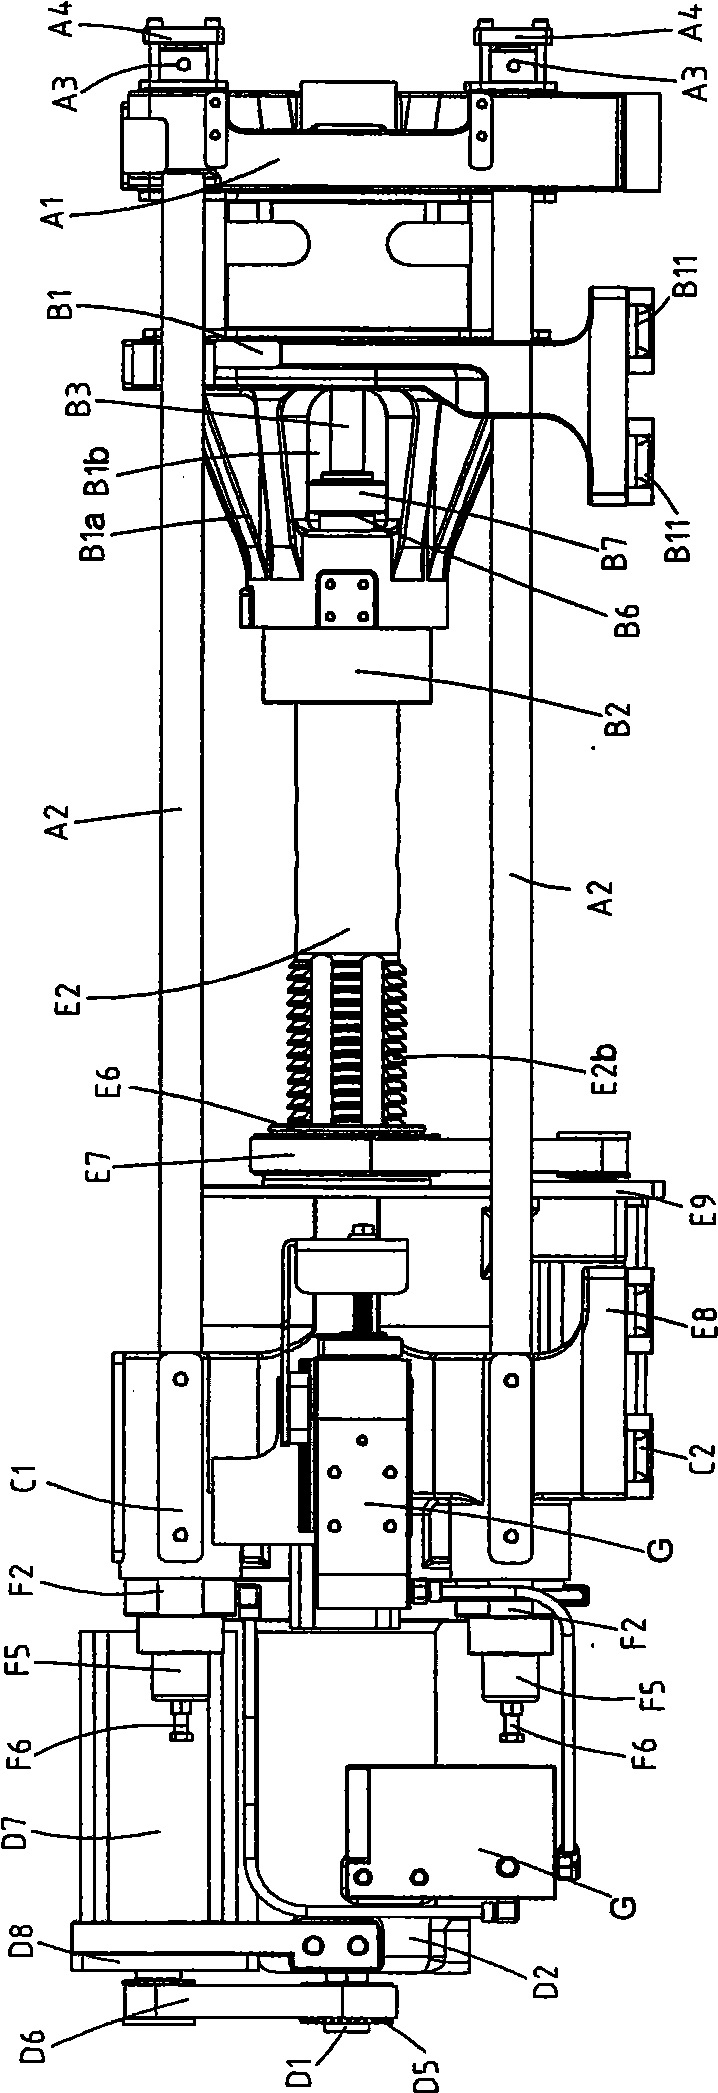 Mode locking mechanism of electric plastic injection machine